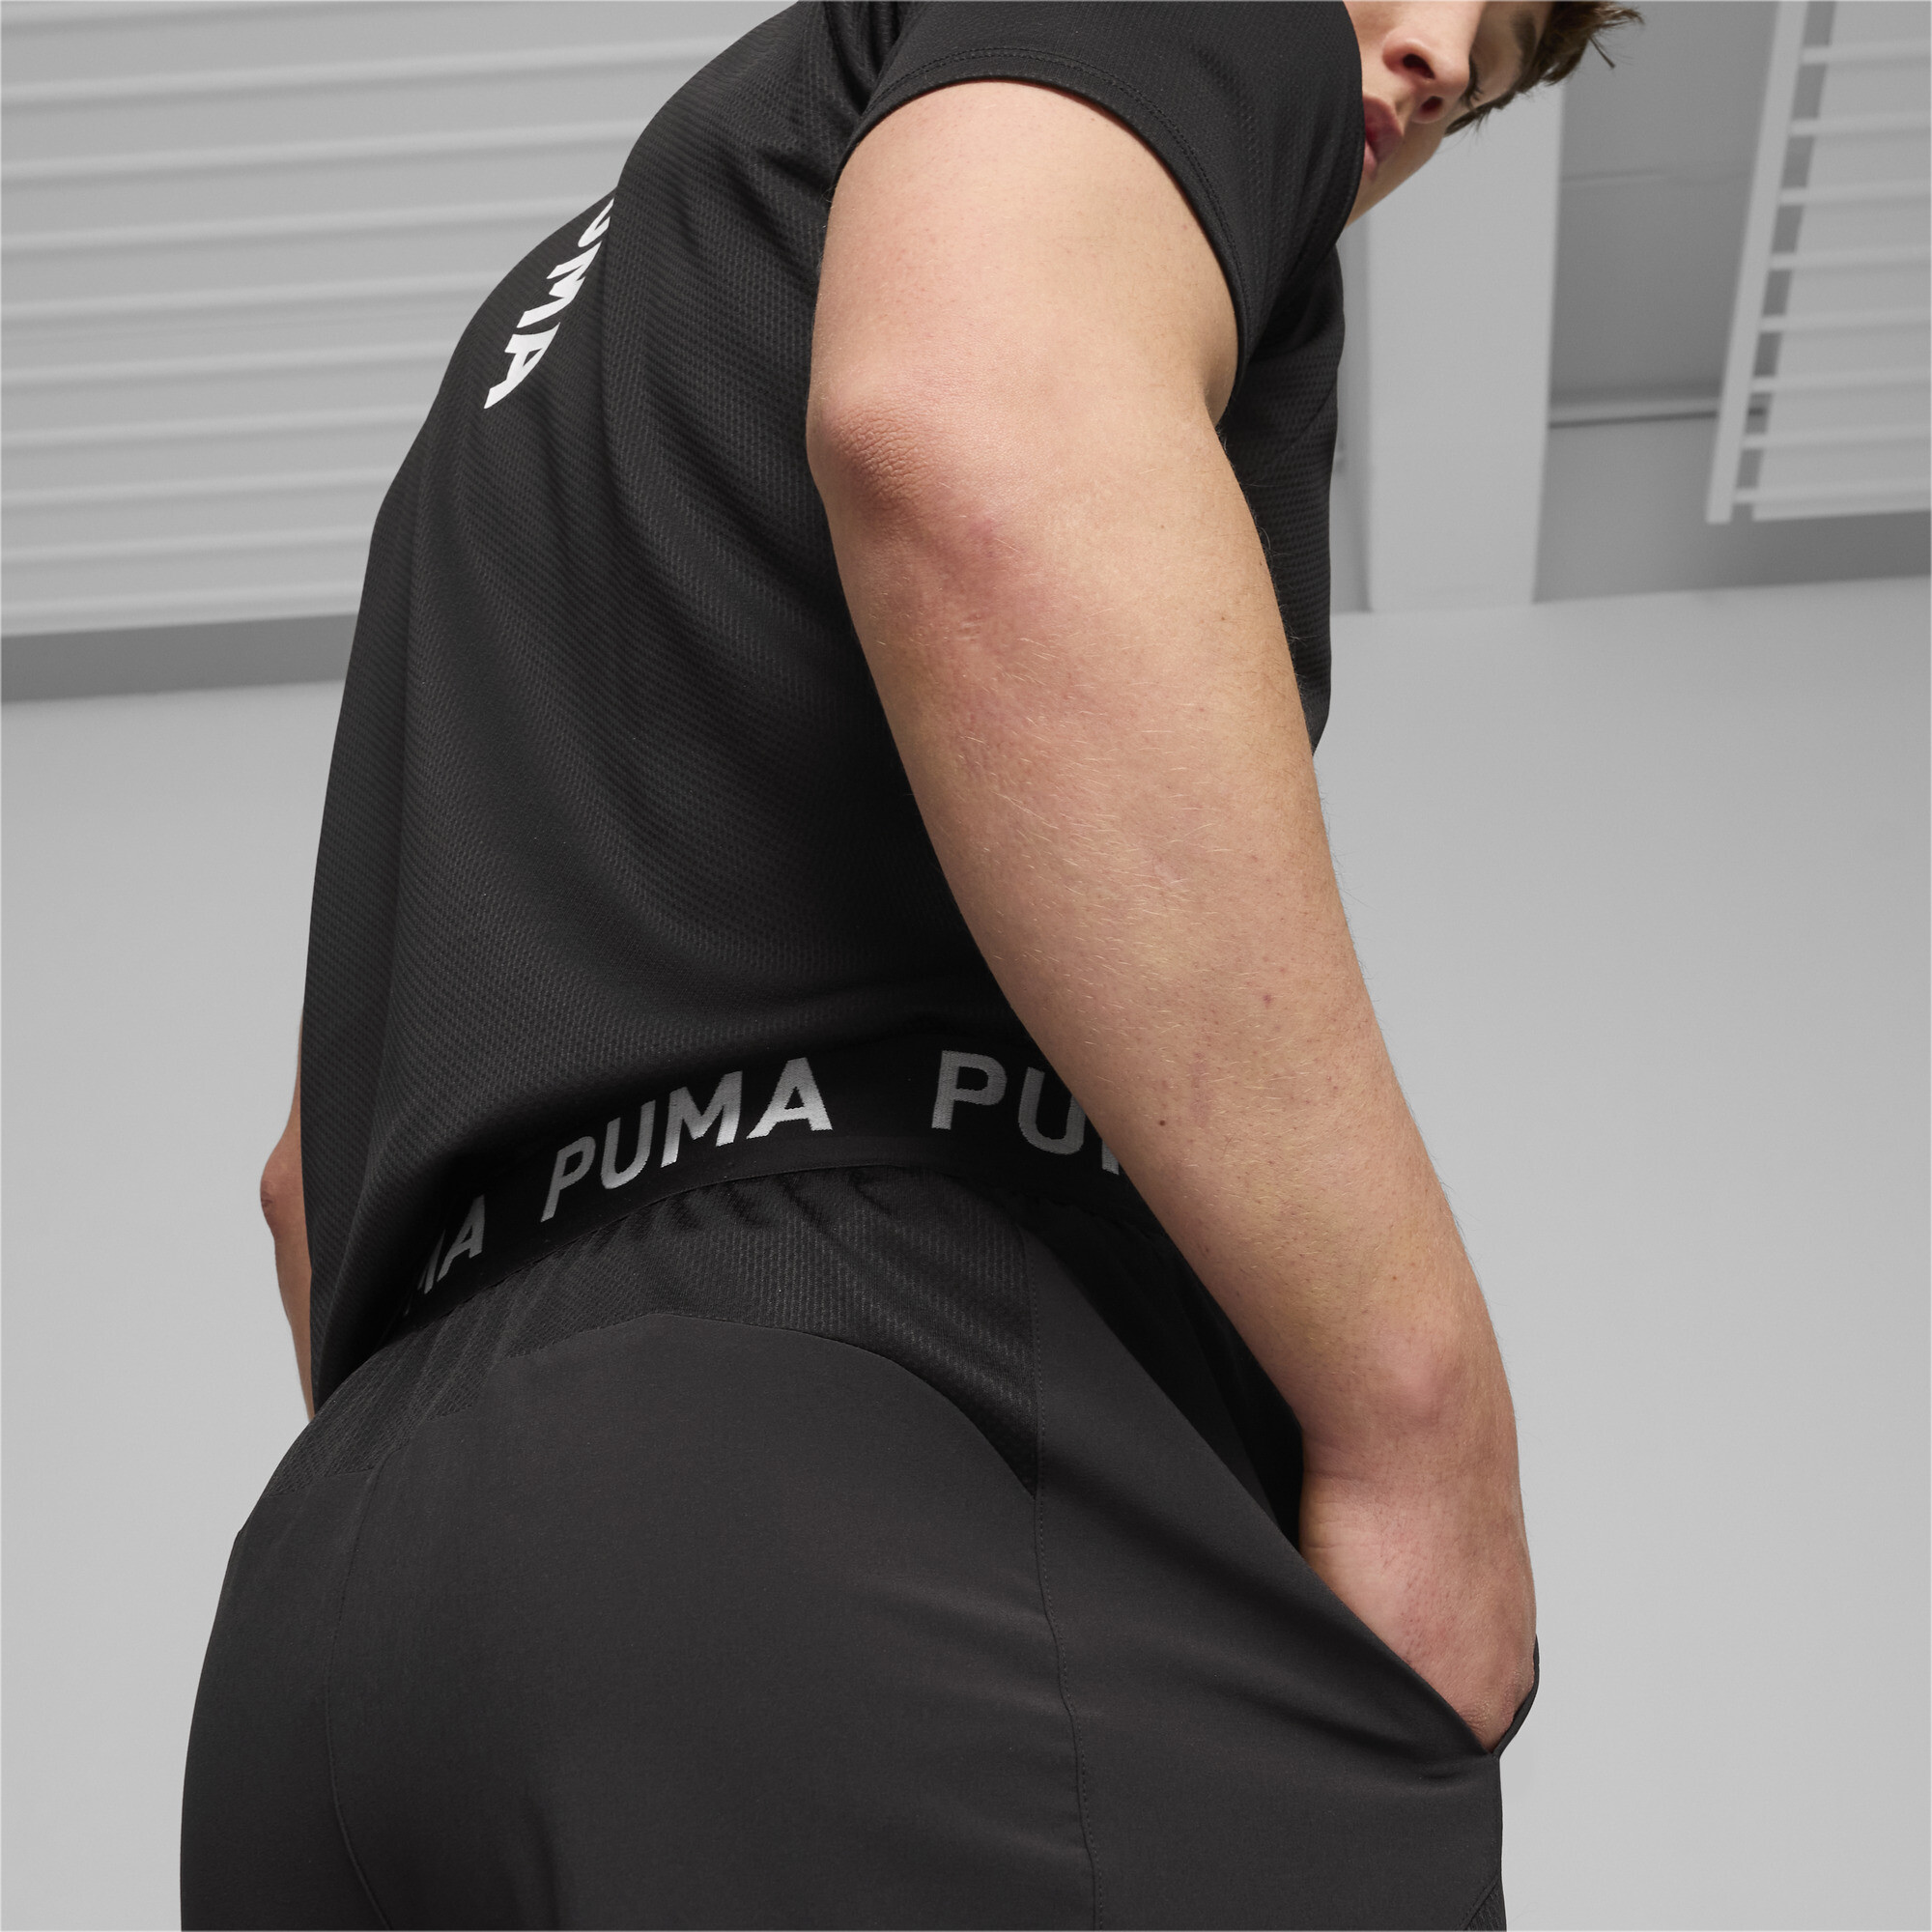 Puma 7 Stretch Woven's Training Shorts, Black, Size 3XL, Clothing